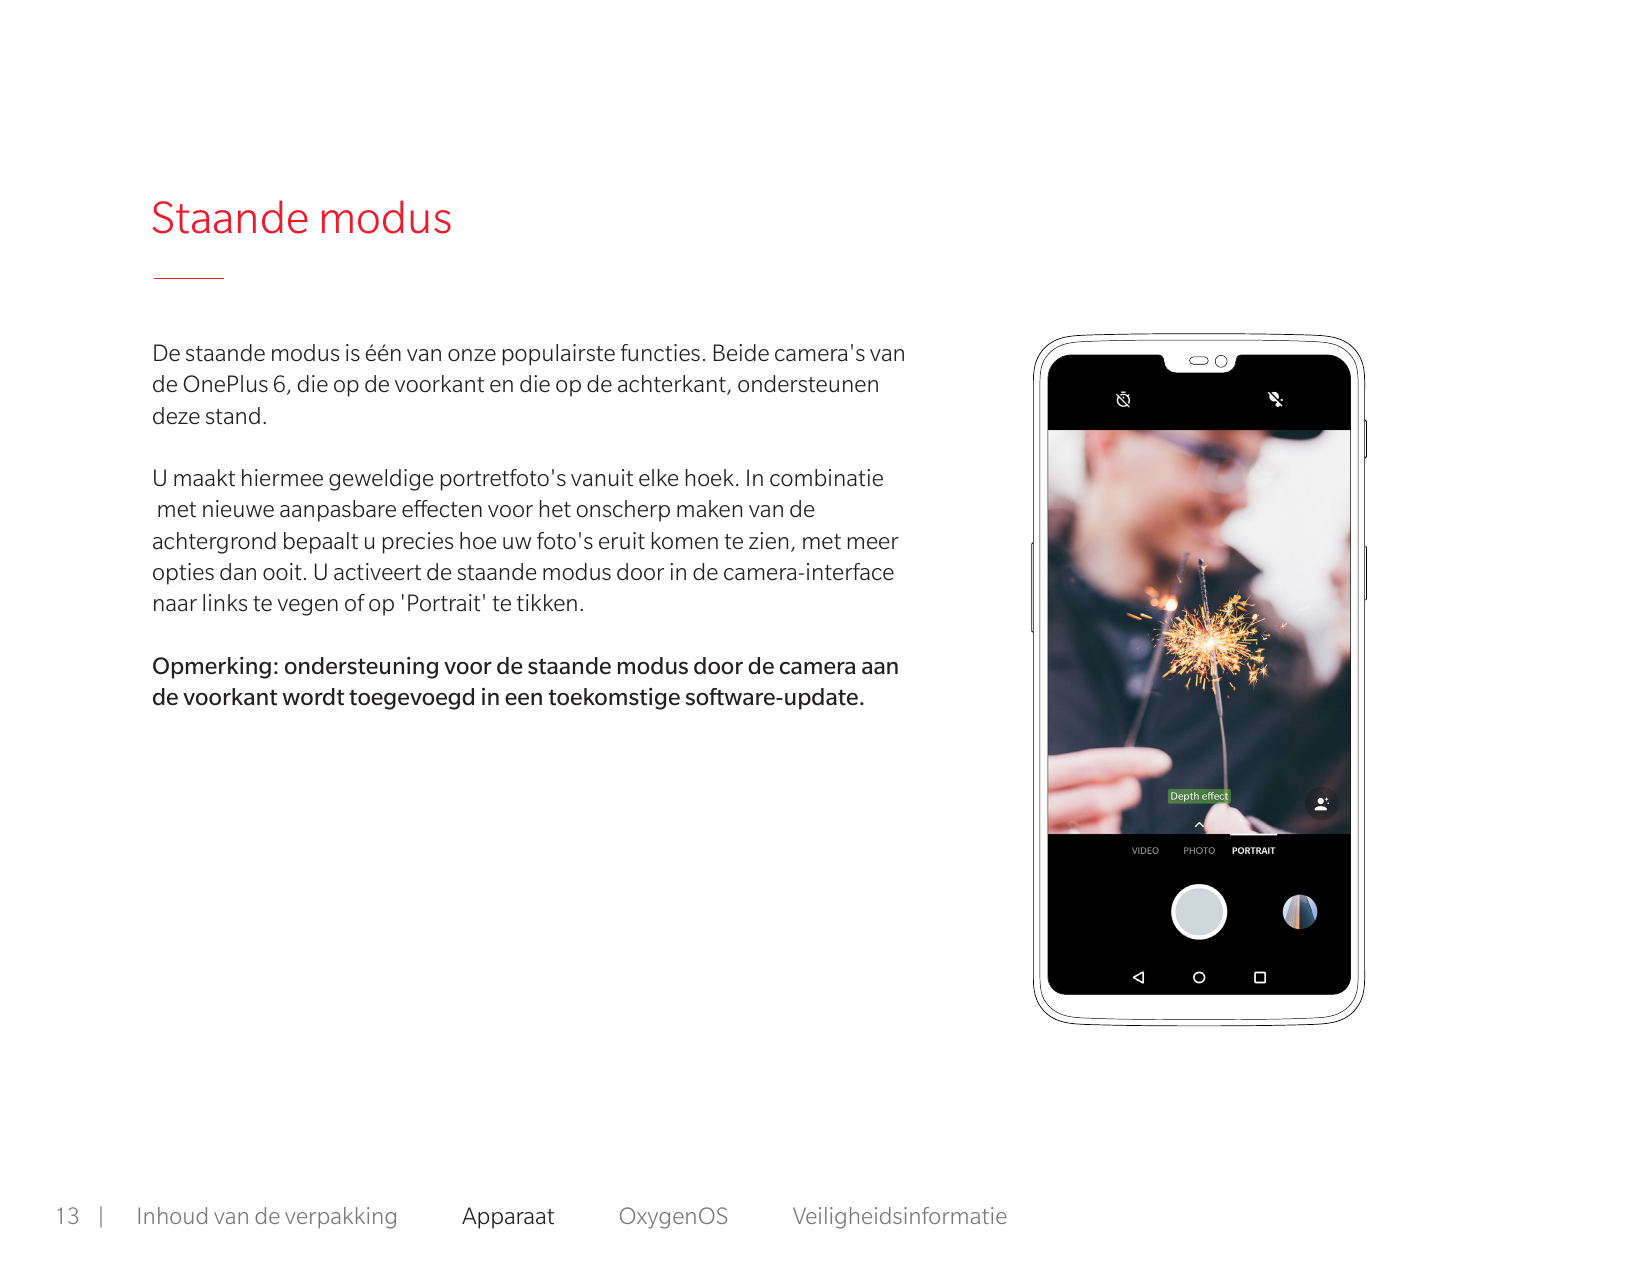 Staande modusDe staande modus is één van onze populairste functies. Beide camera's vande OnePlus 6, die op de voorkant en die op